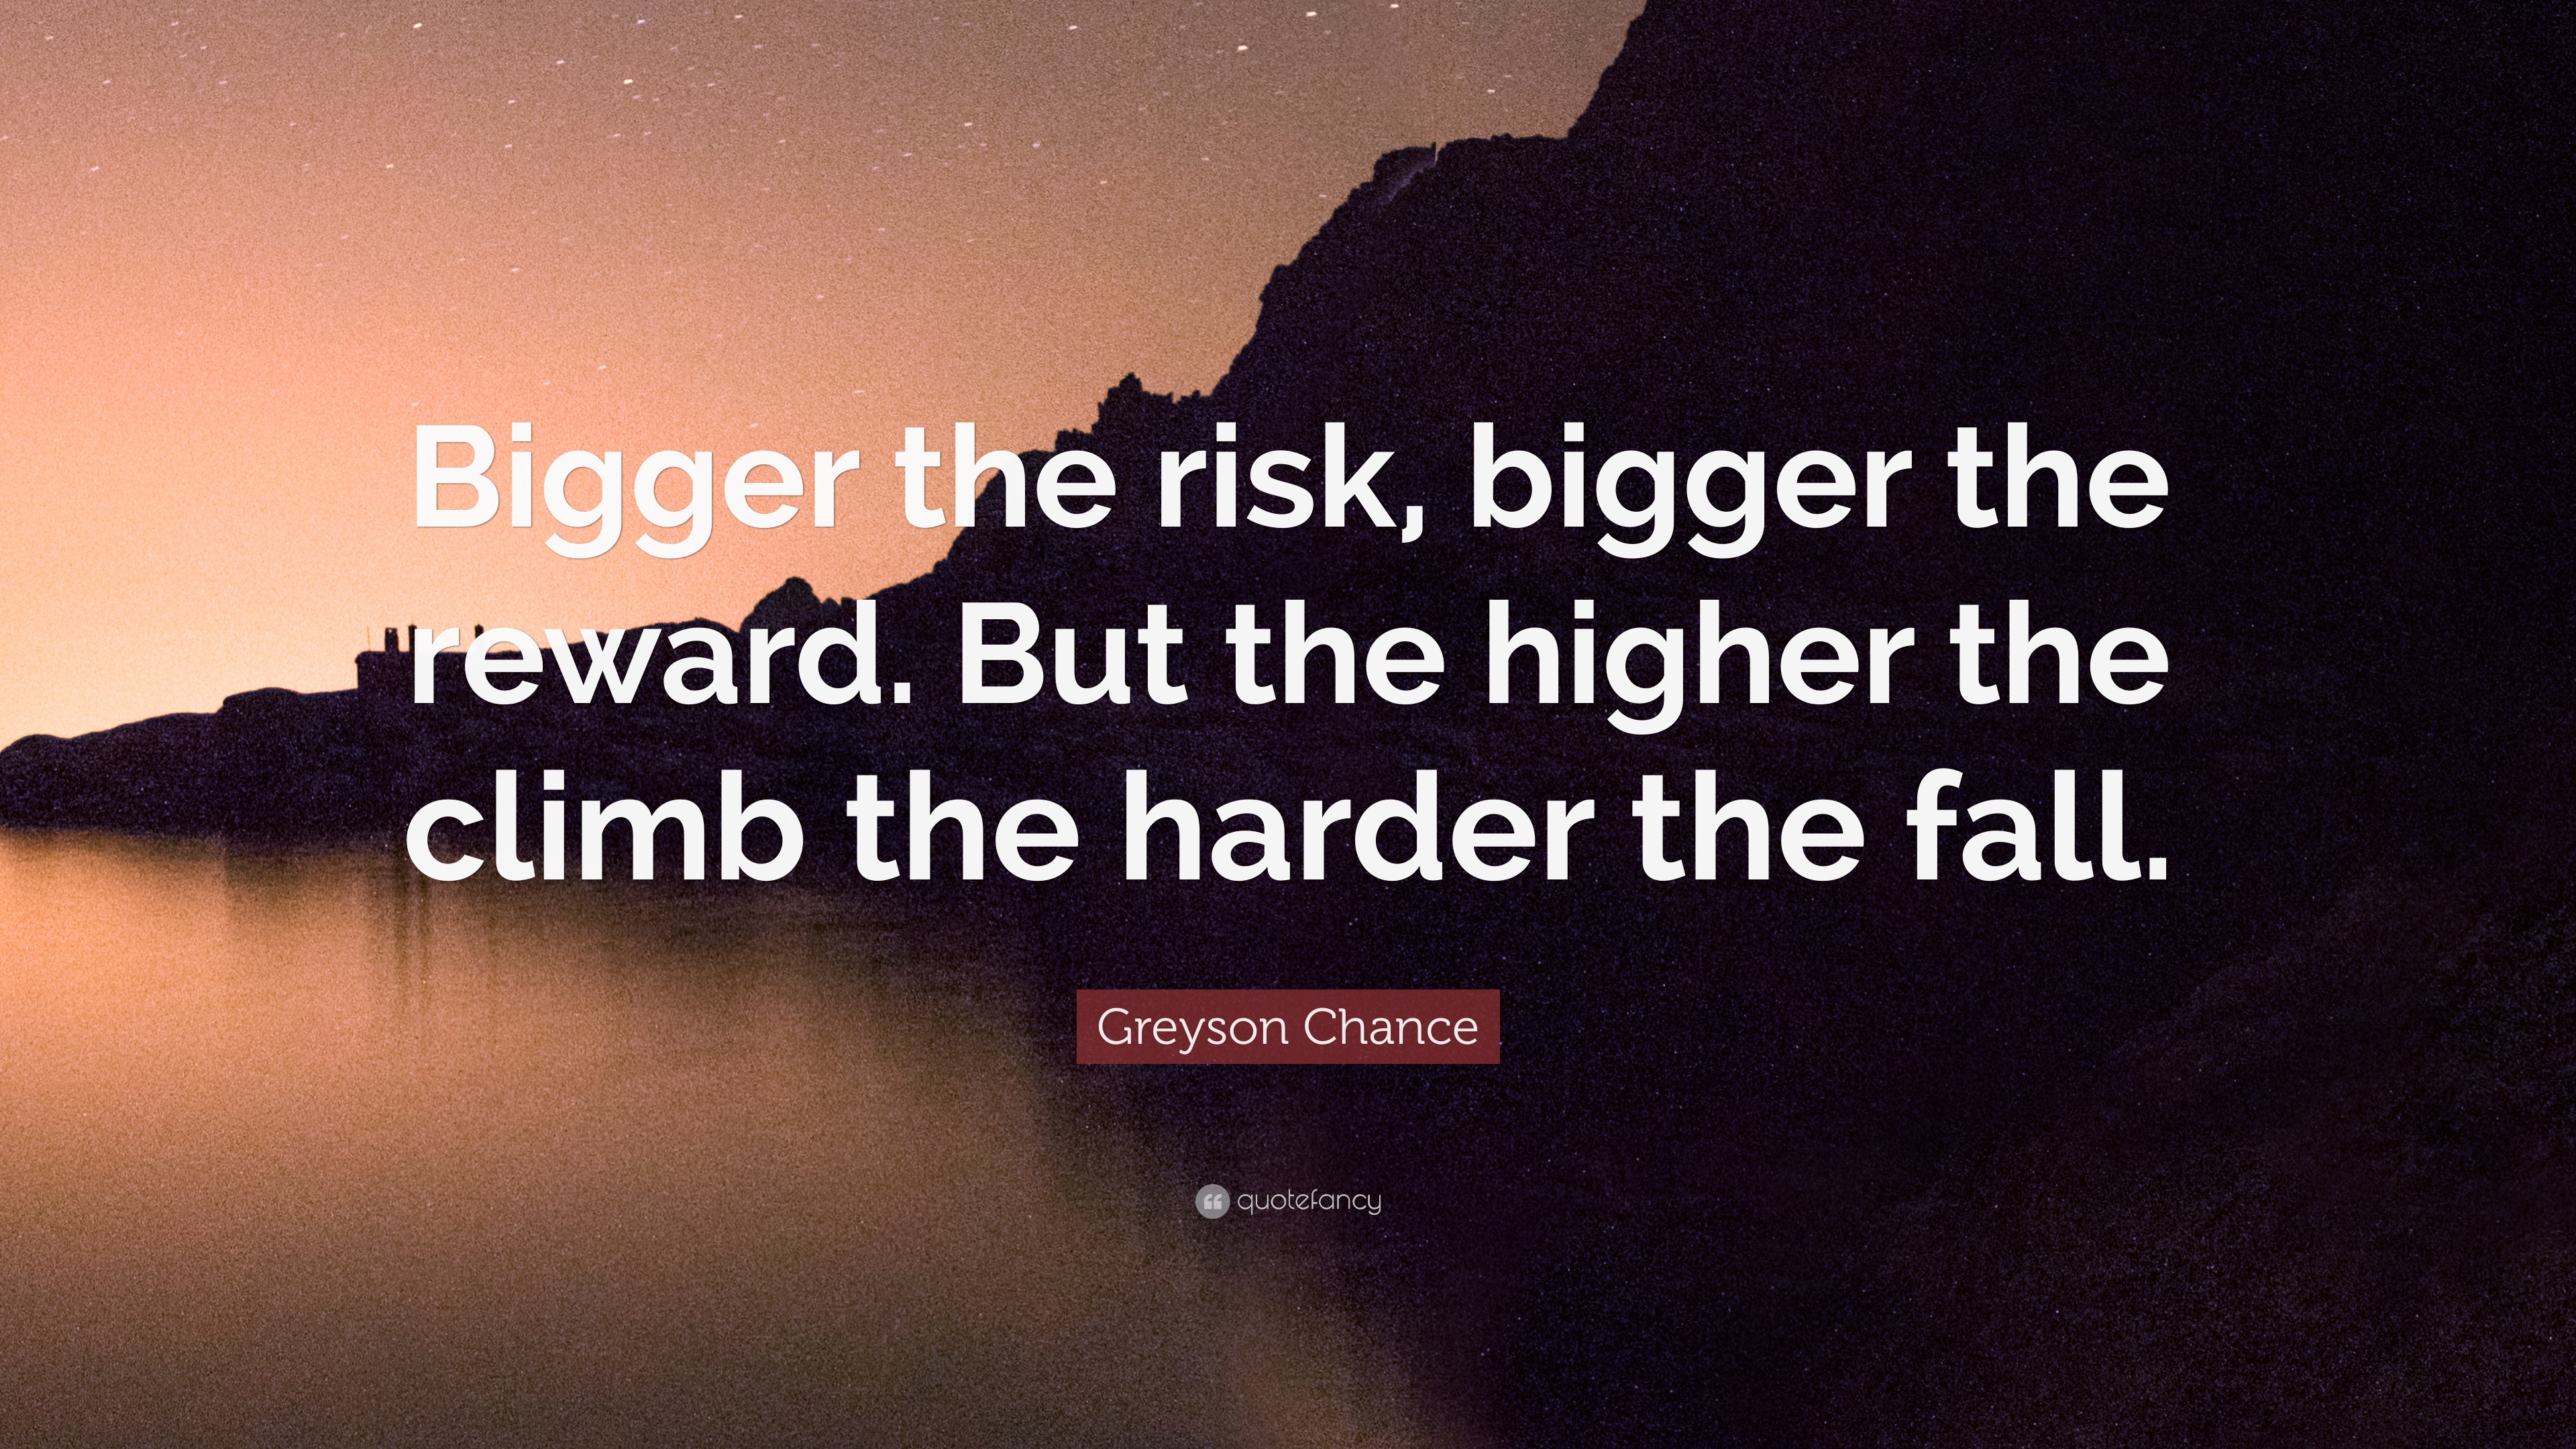 Greyson Chance Quote: “Bigger the risk, bigger the reward. But the